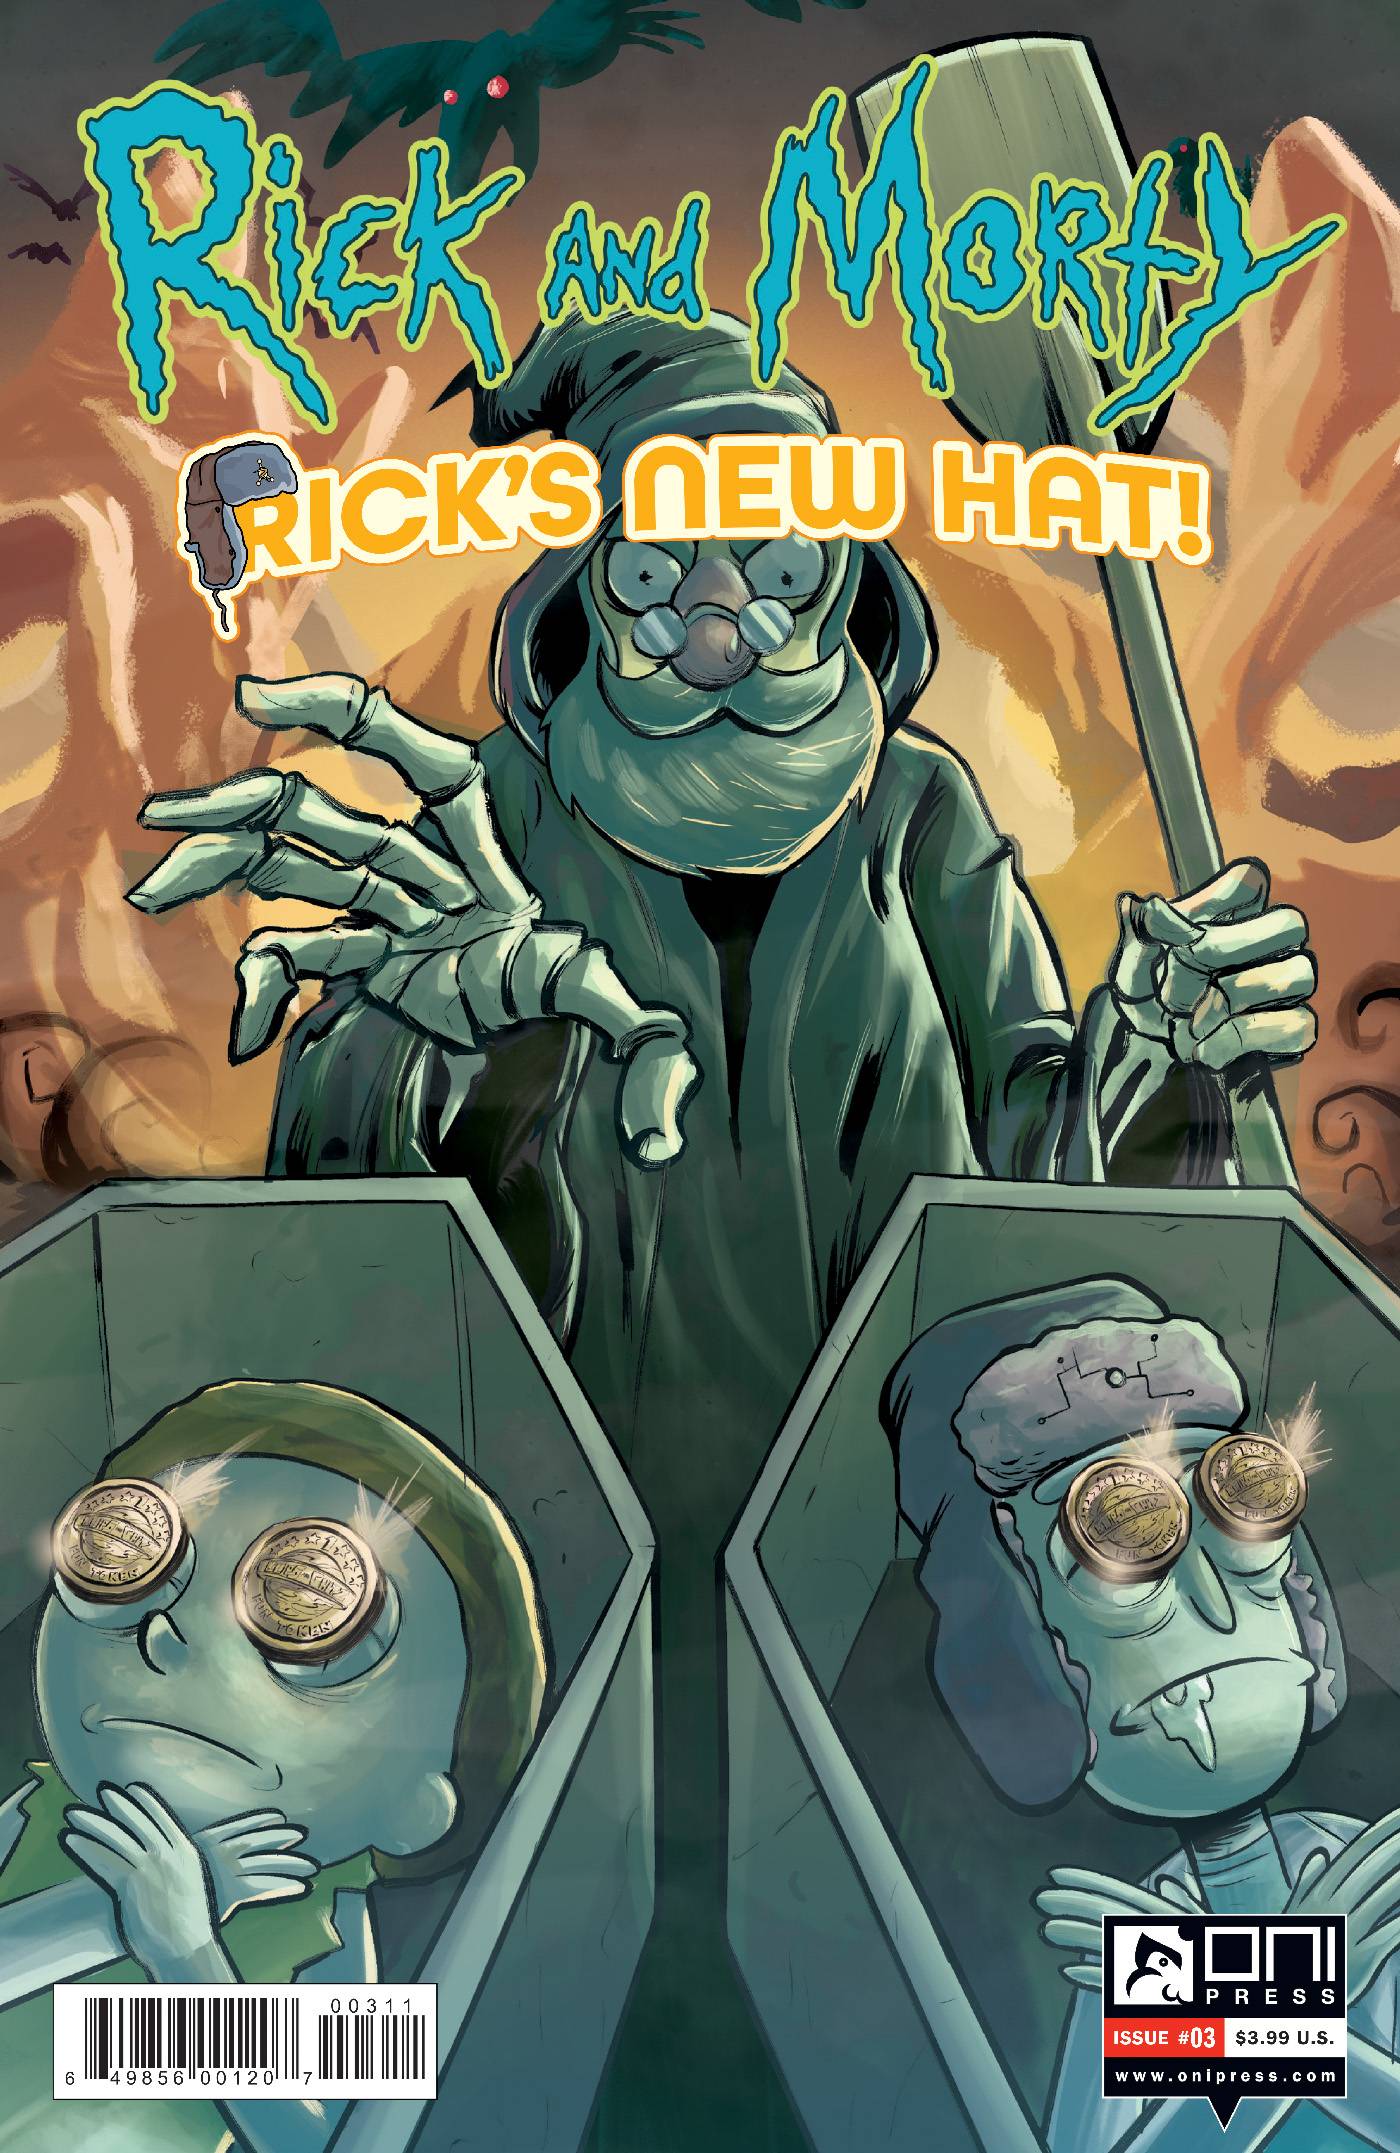 RICK AND MORTY RICKS NEW HAT #3 CVR A STRESING